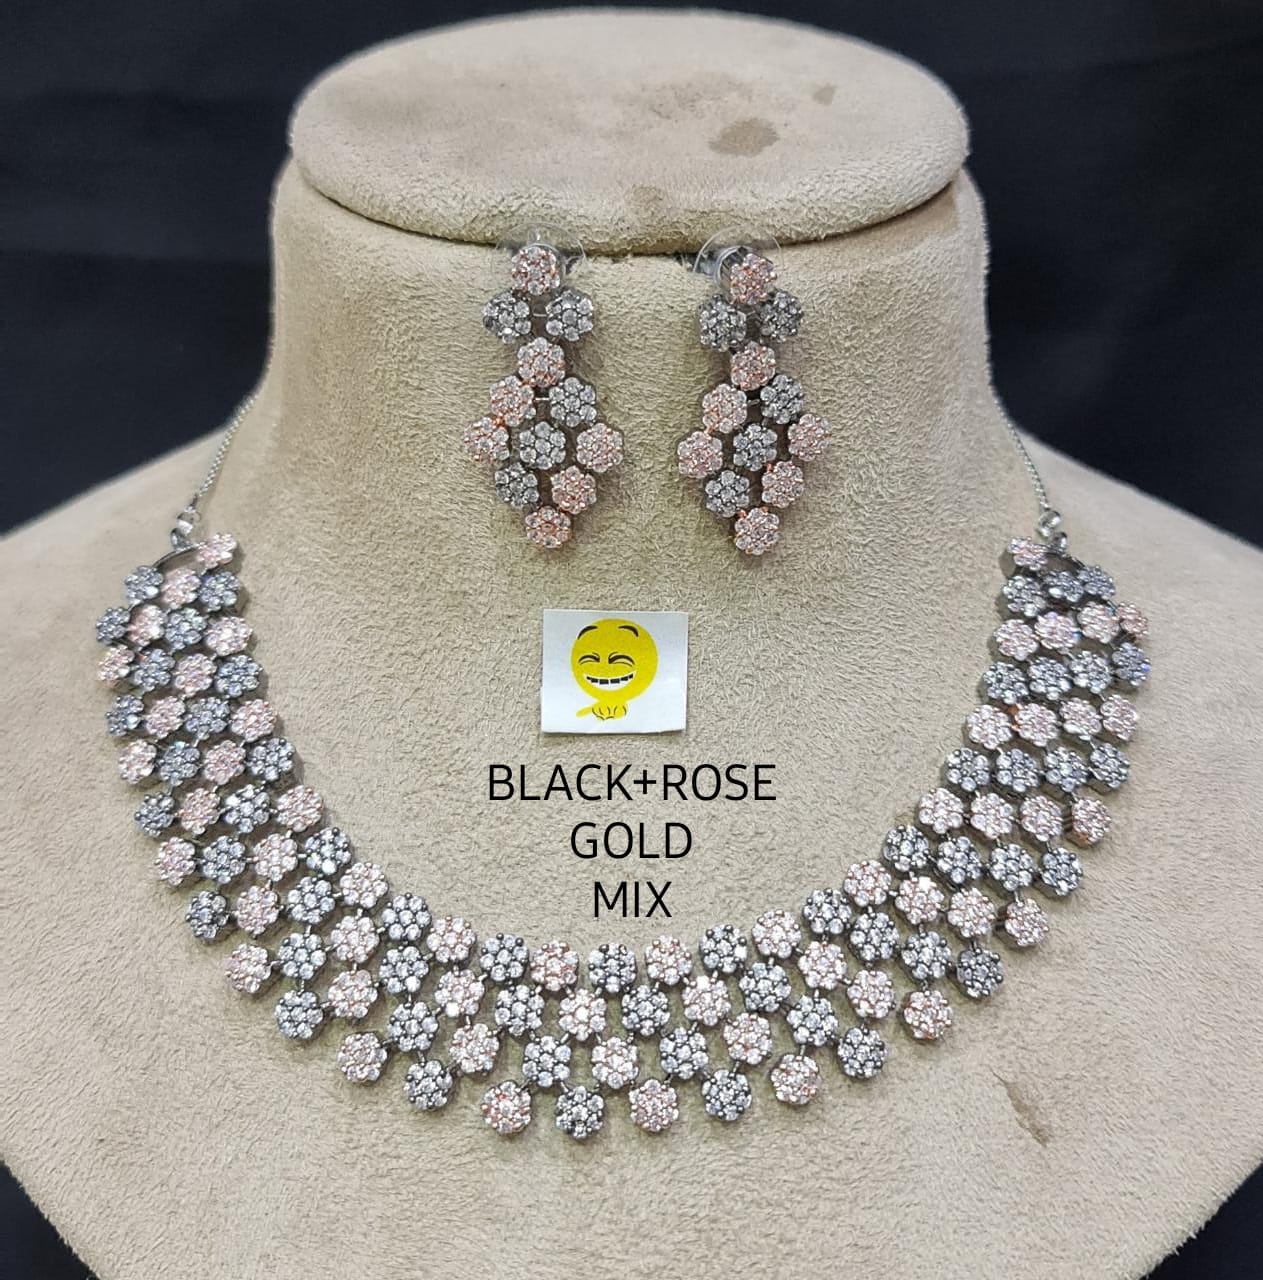 Premium Quality Necklace set for women